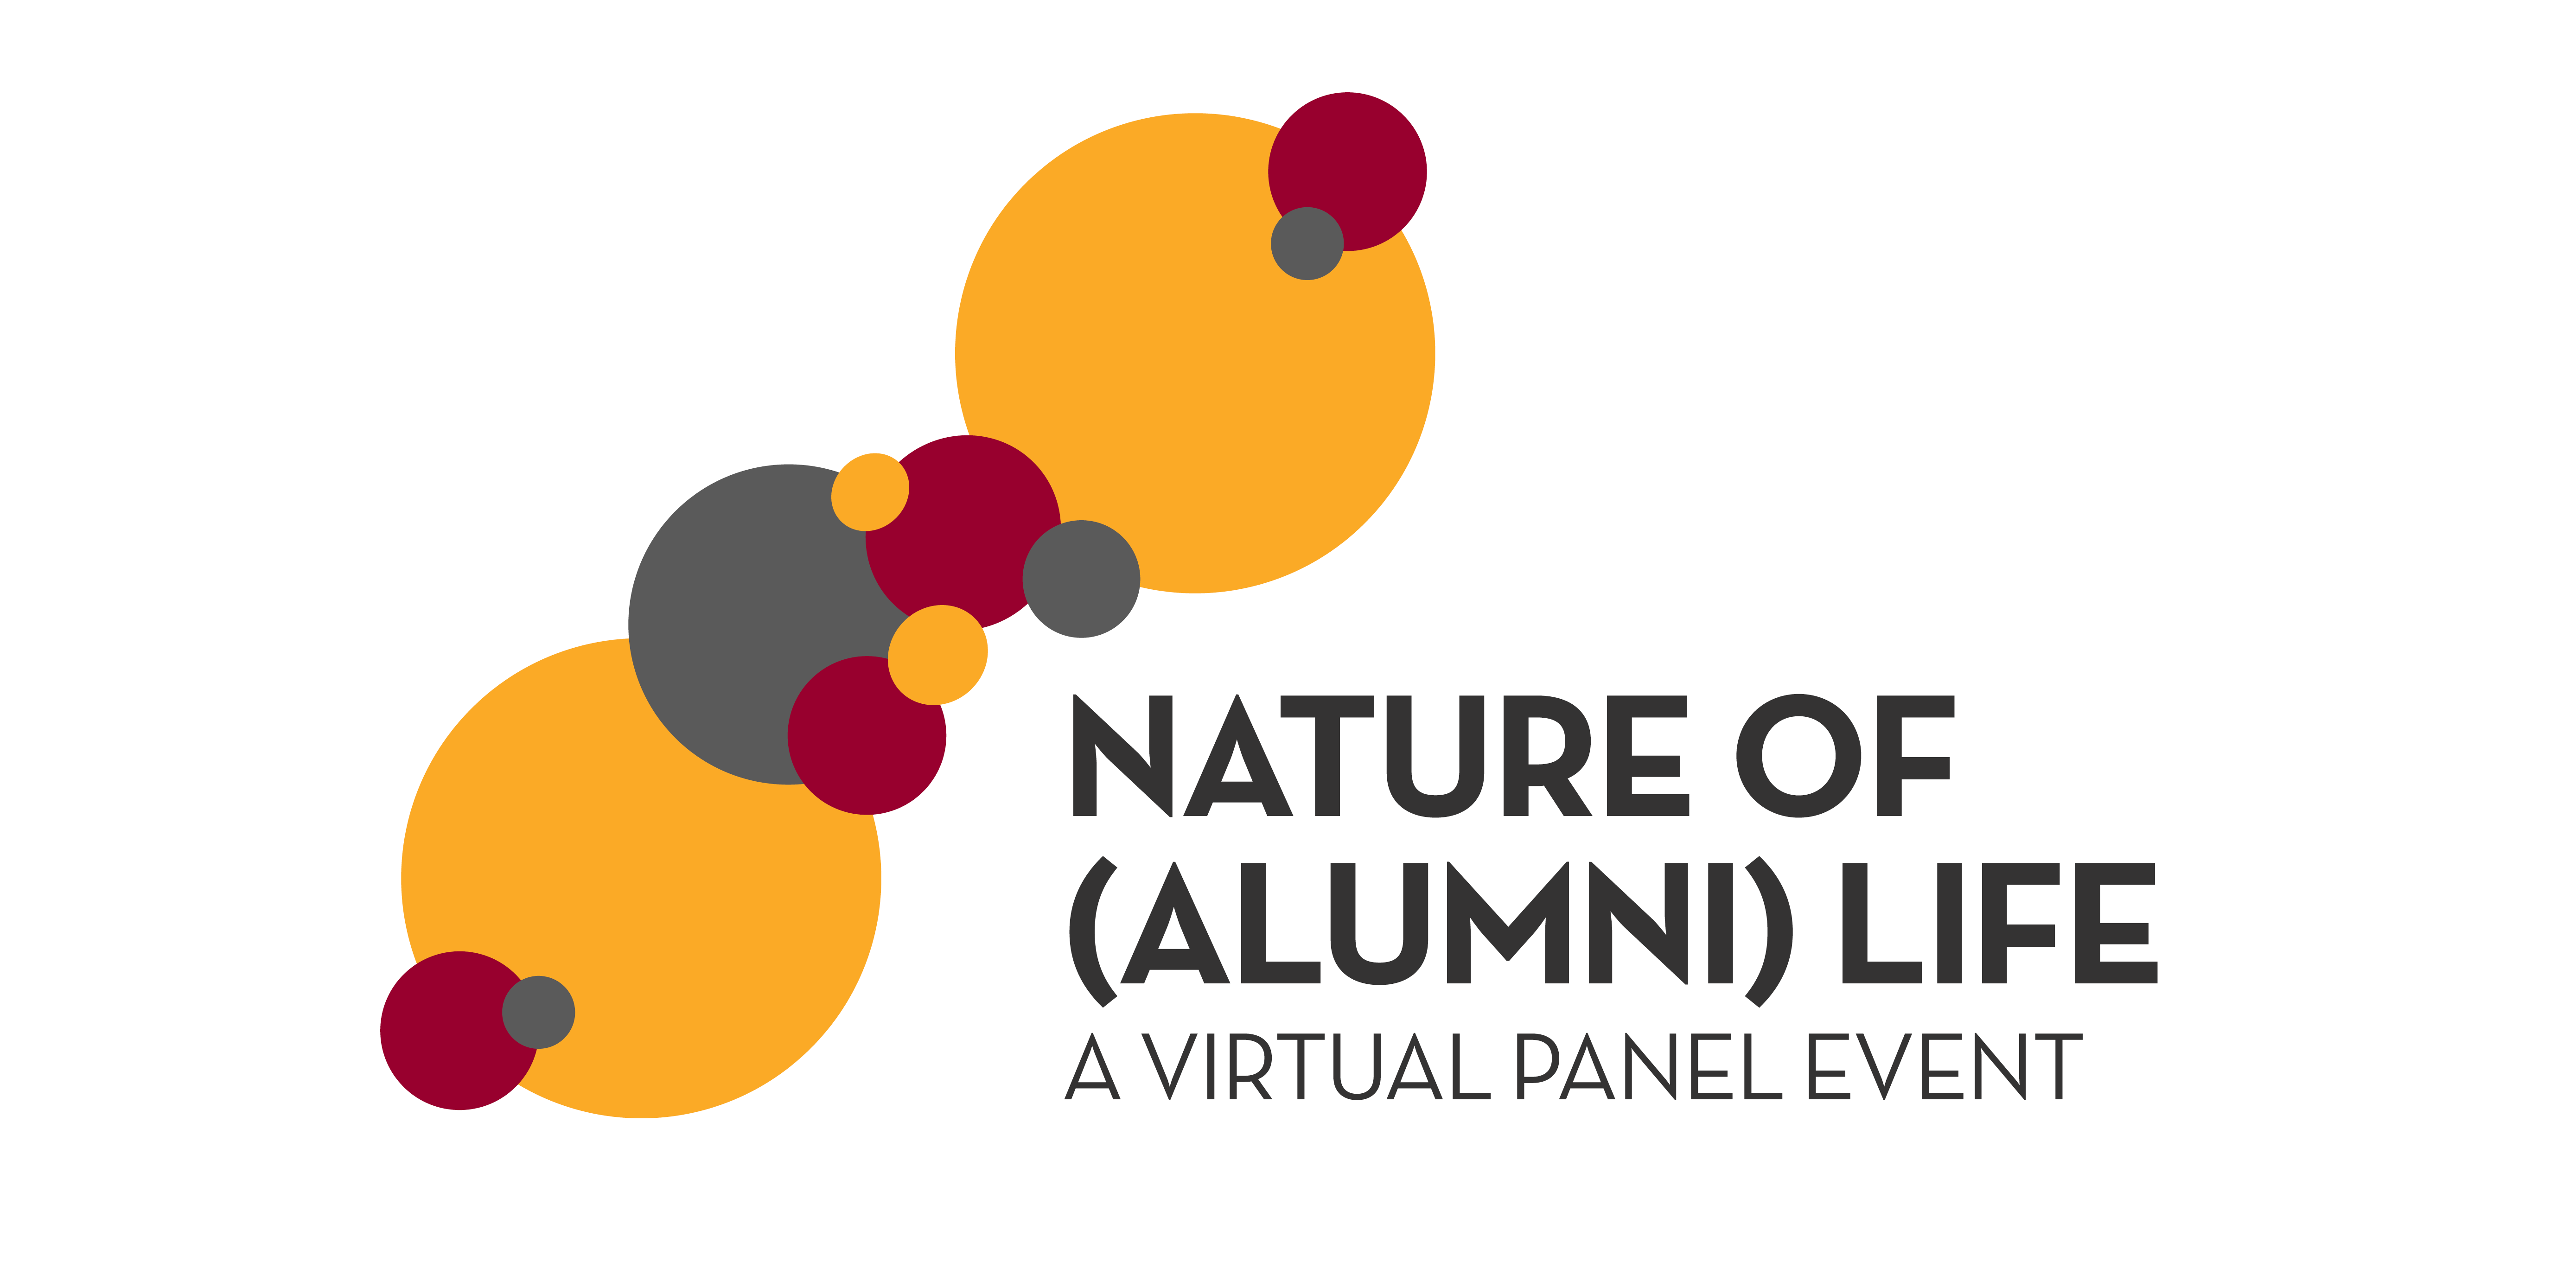 Nature of (Alumni) Life: A Virtual Panel Event